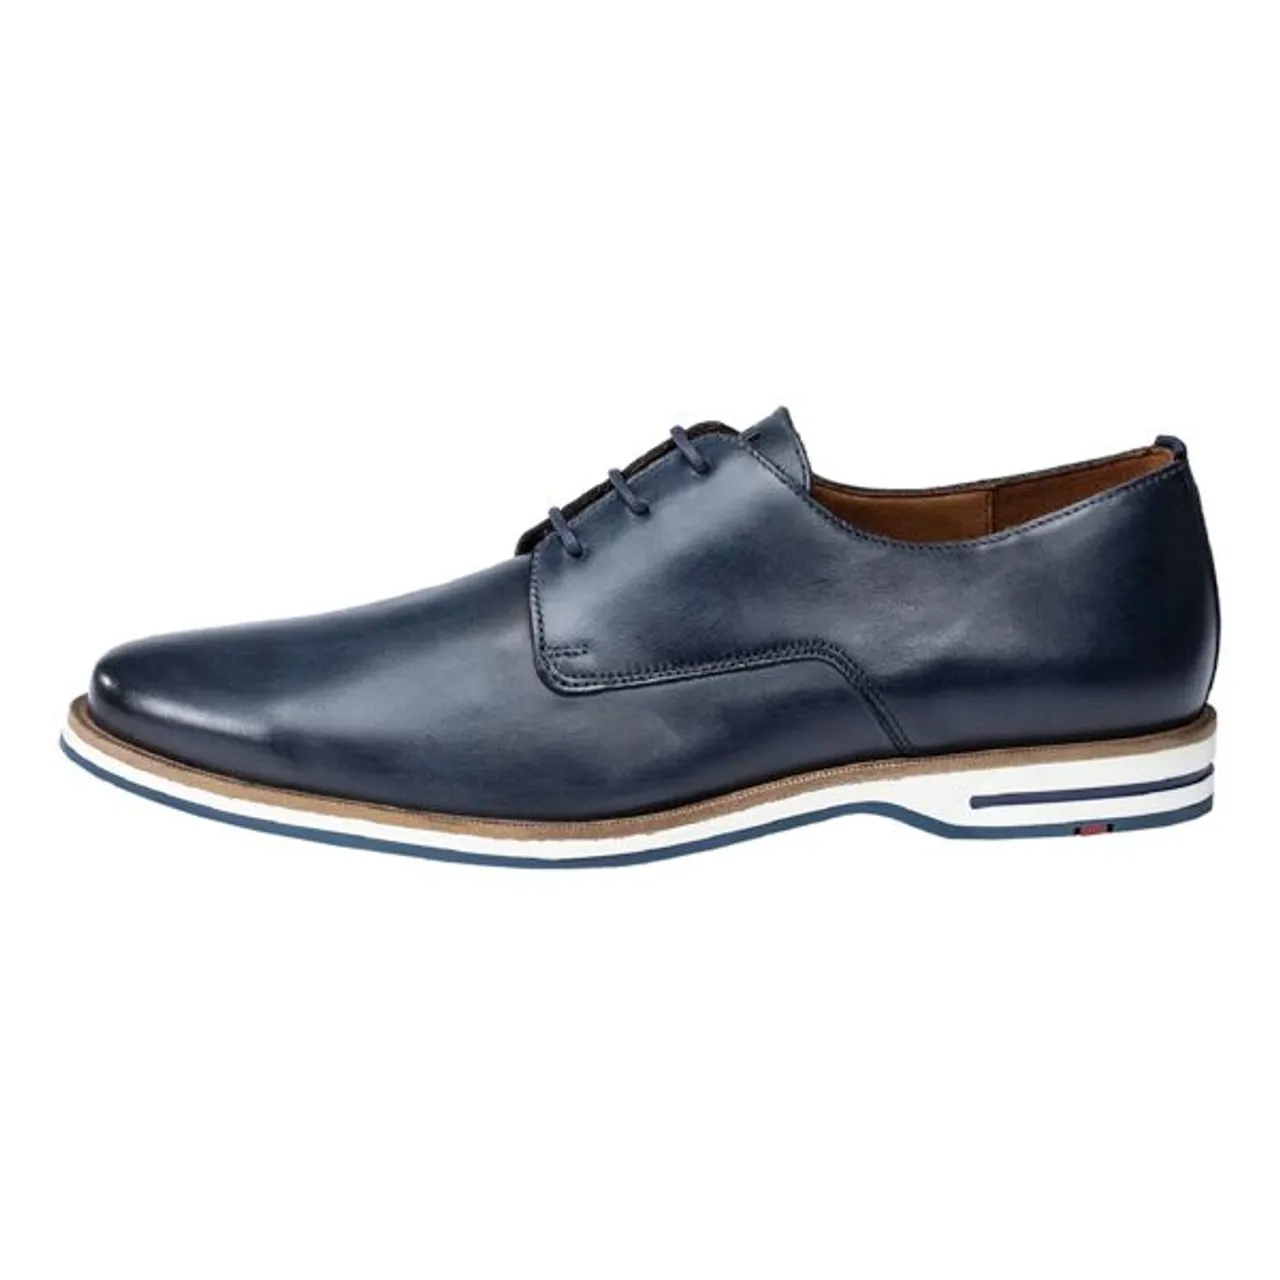 Schnürschuh LLOYD "Dakin" Gr. 10 (44,5), blau (dunkelblau) Herren Schuhe Schnürhalbschuhe